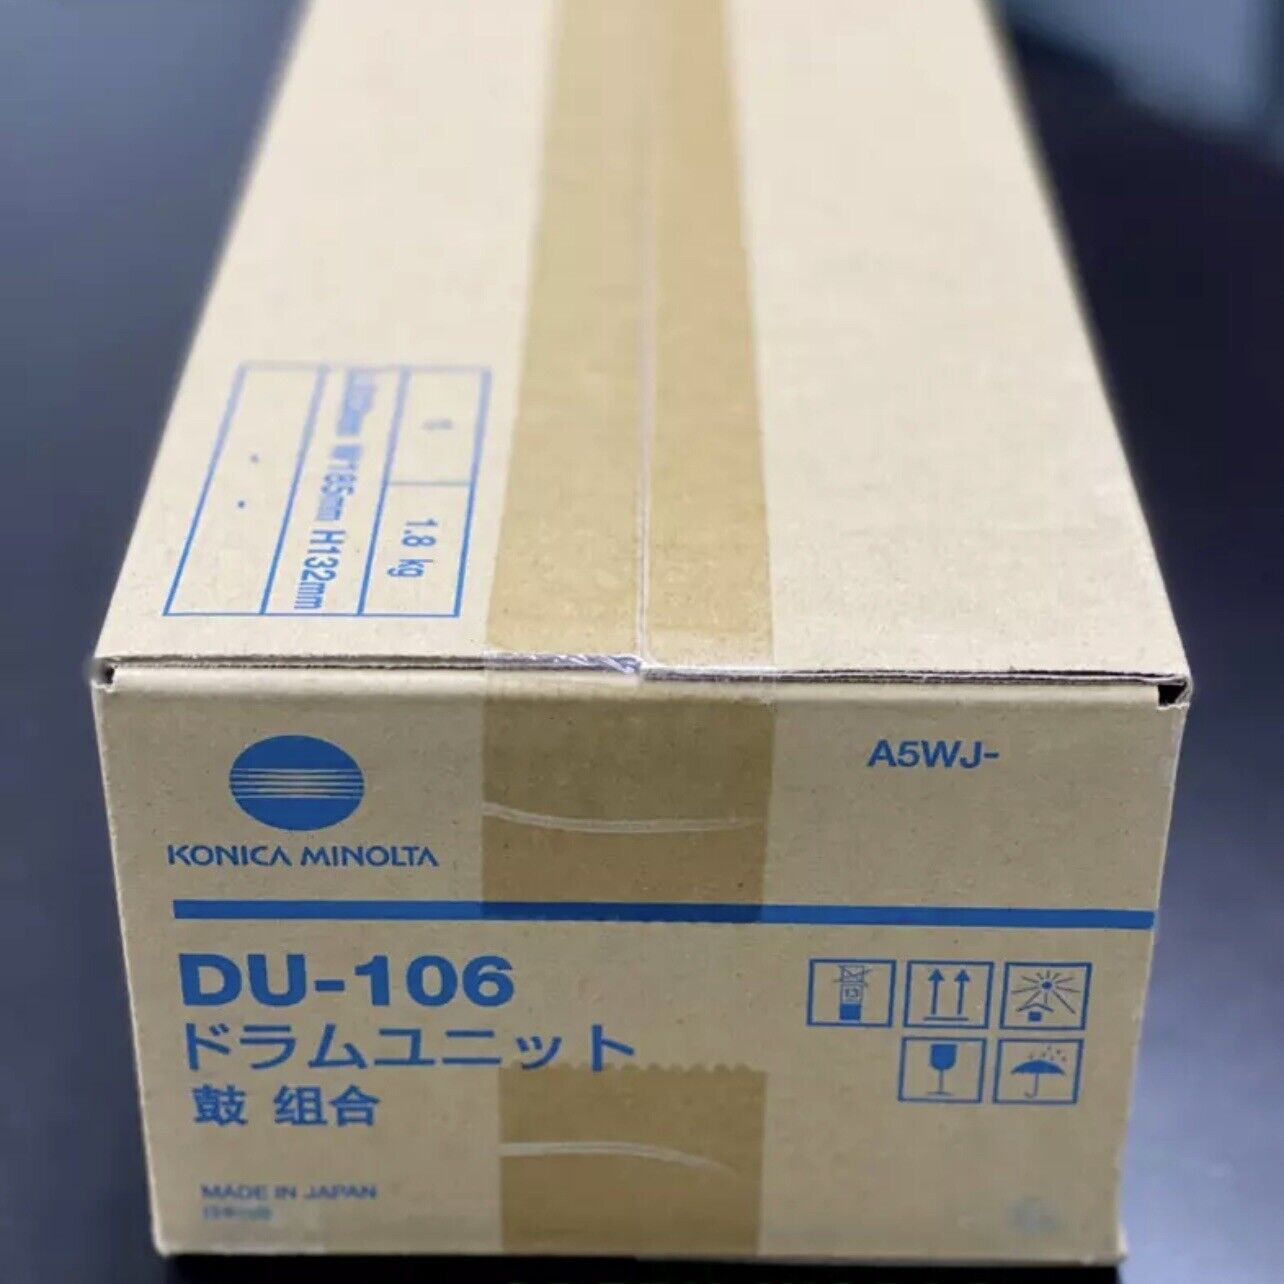 New OEM Konica Minolta DU-106 Drum Unit (A5WJ0Y0) for C1060L/C1070 • SEALED BOX